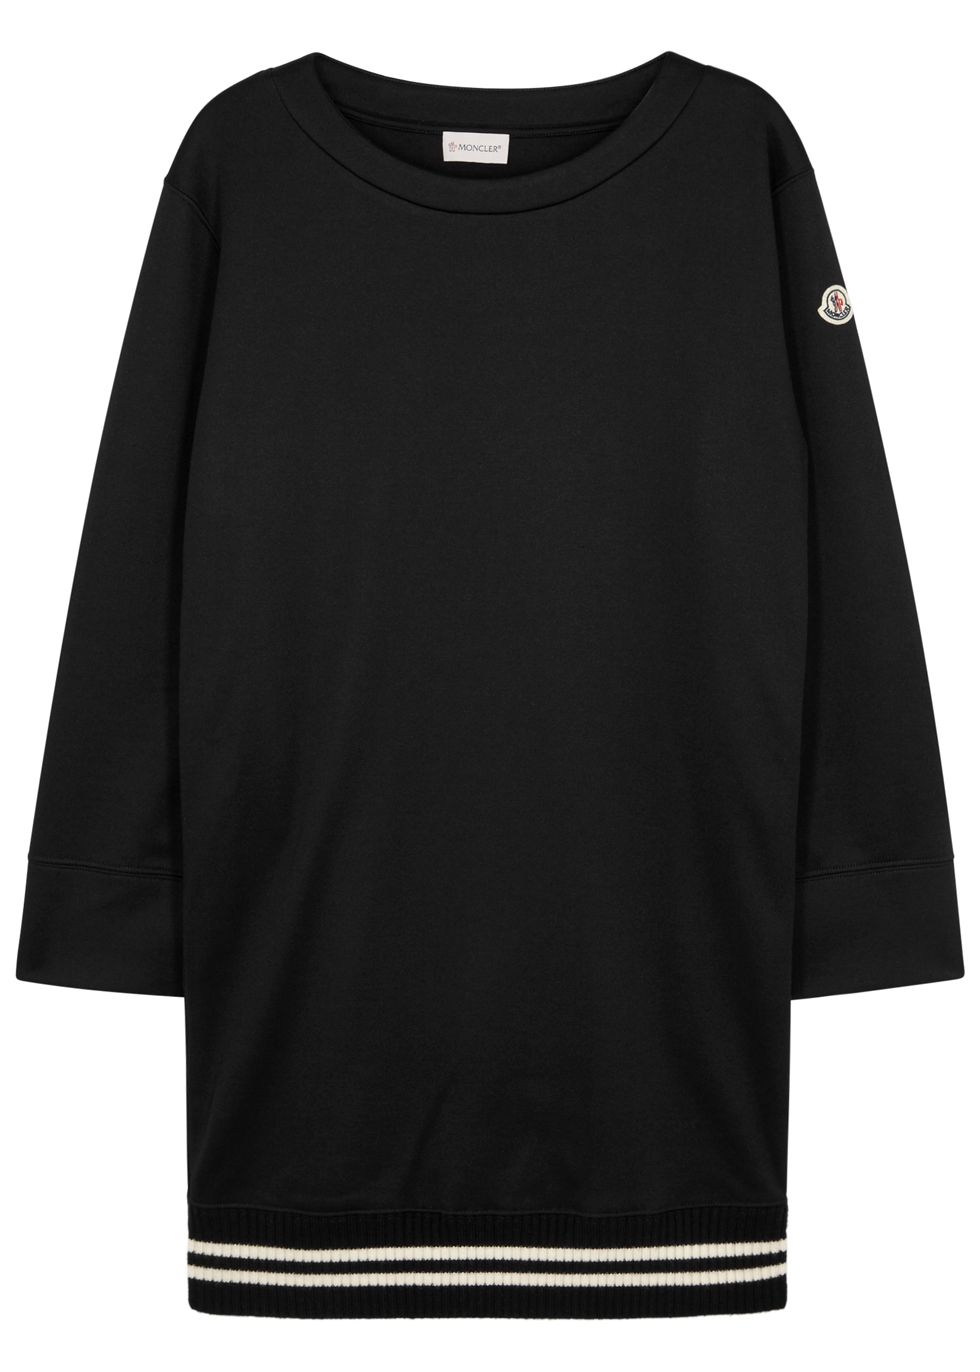 black longline sweatshirt